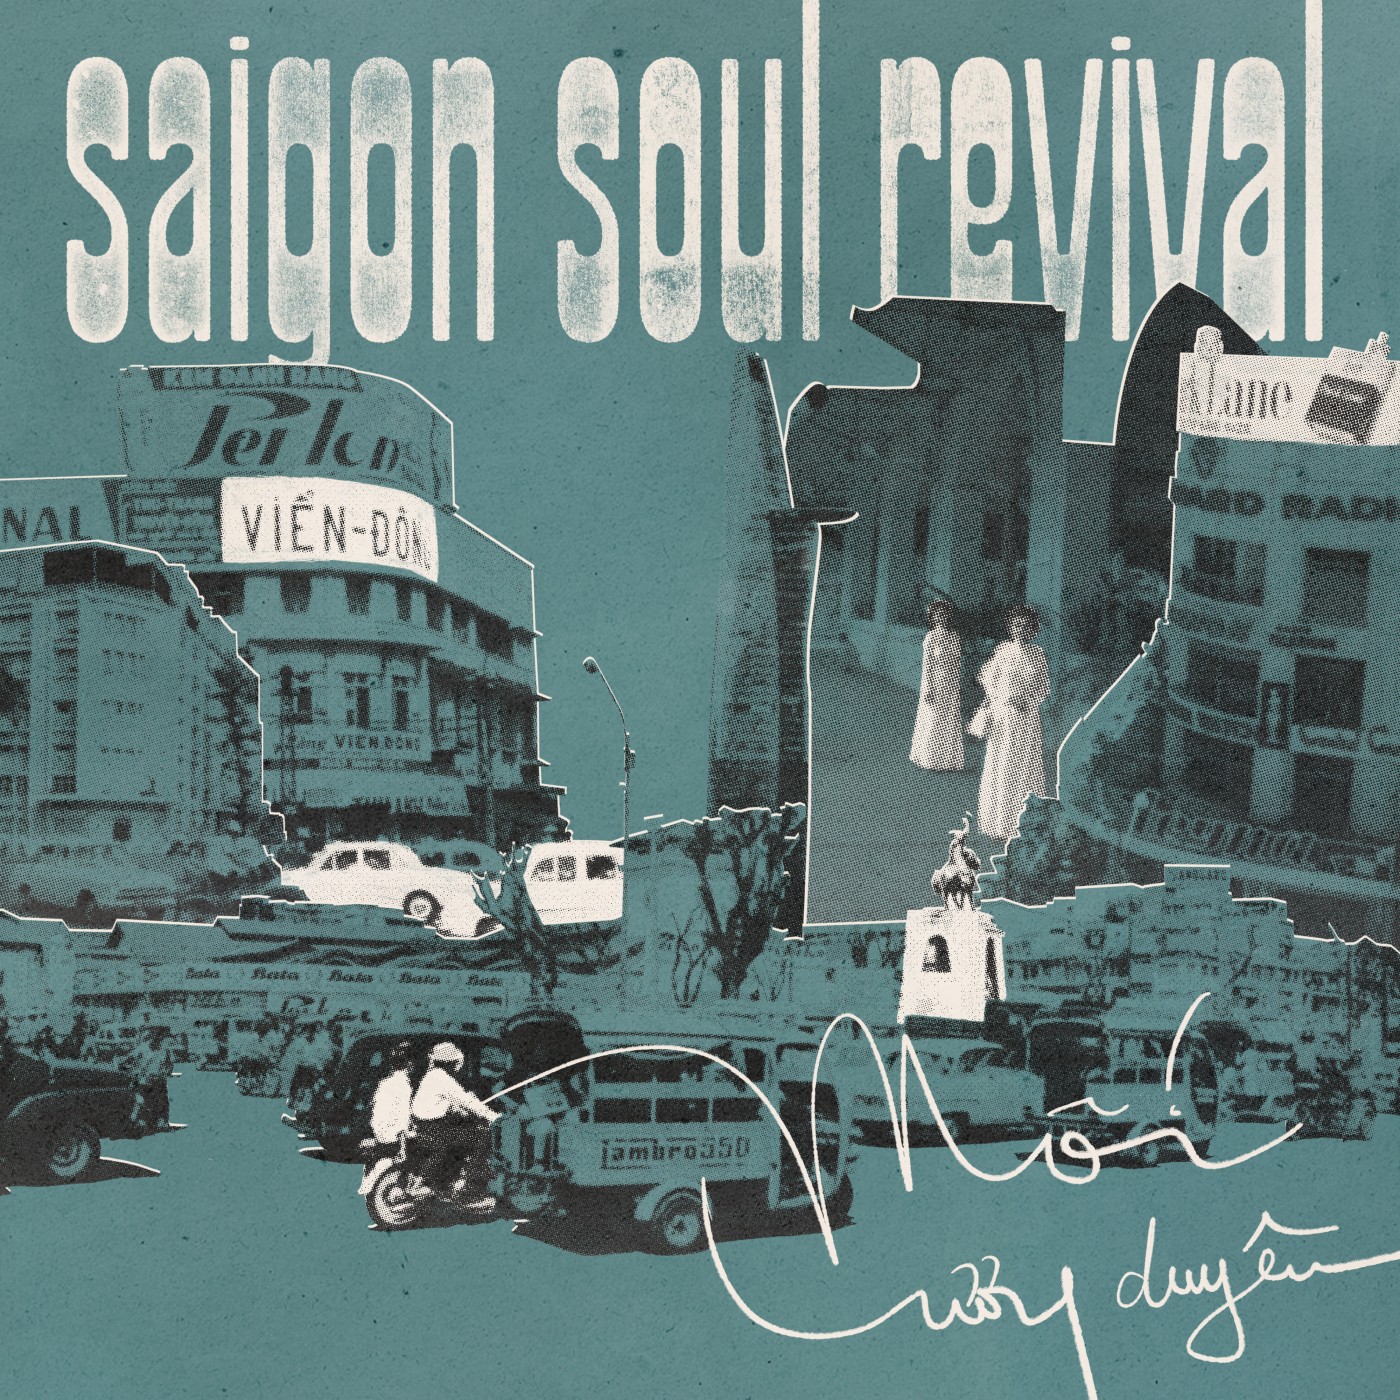 09 Saigon Soul Revival - Mối lương duyên World, Soul.jpg